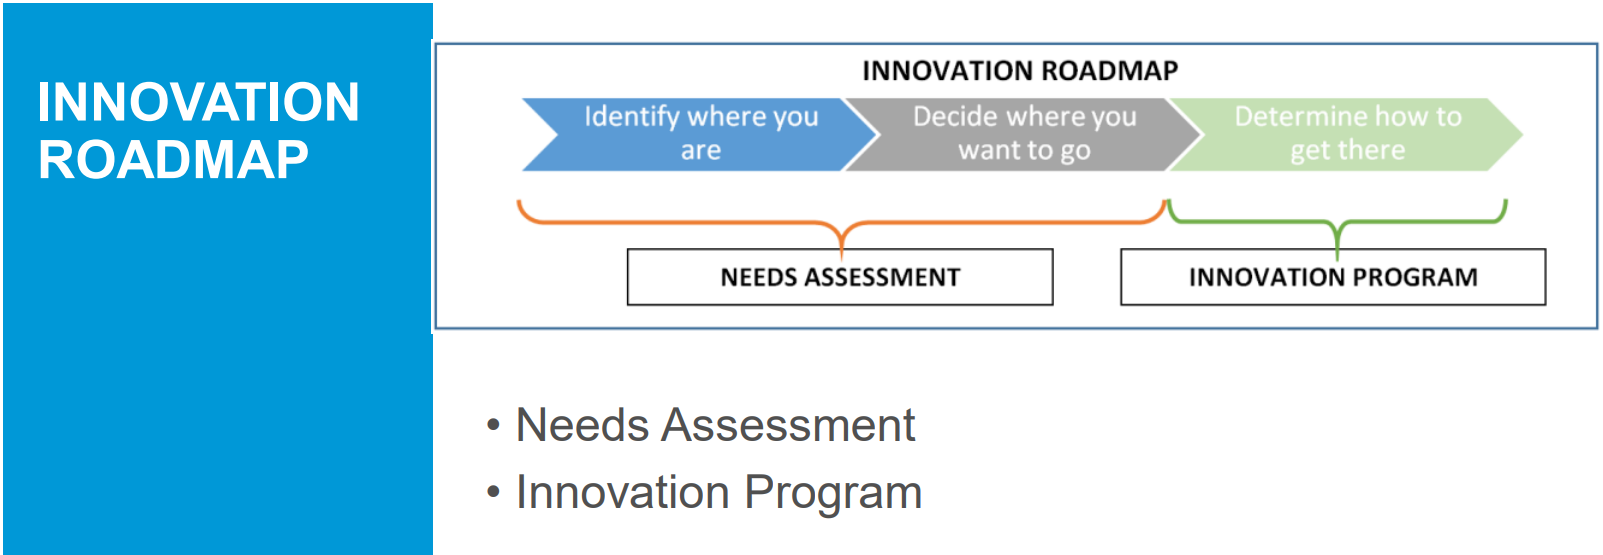 innovation-roadmap-example